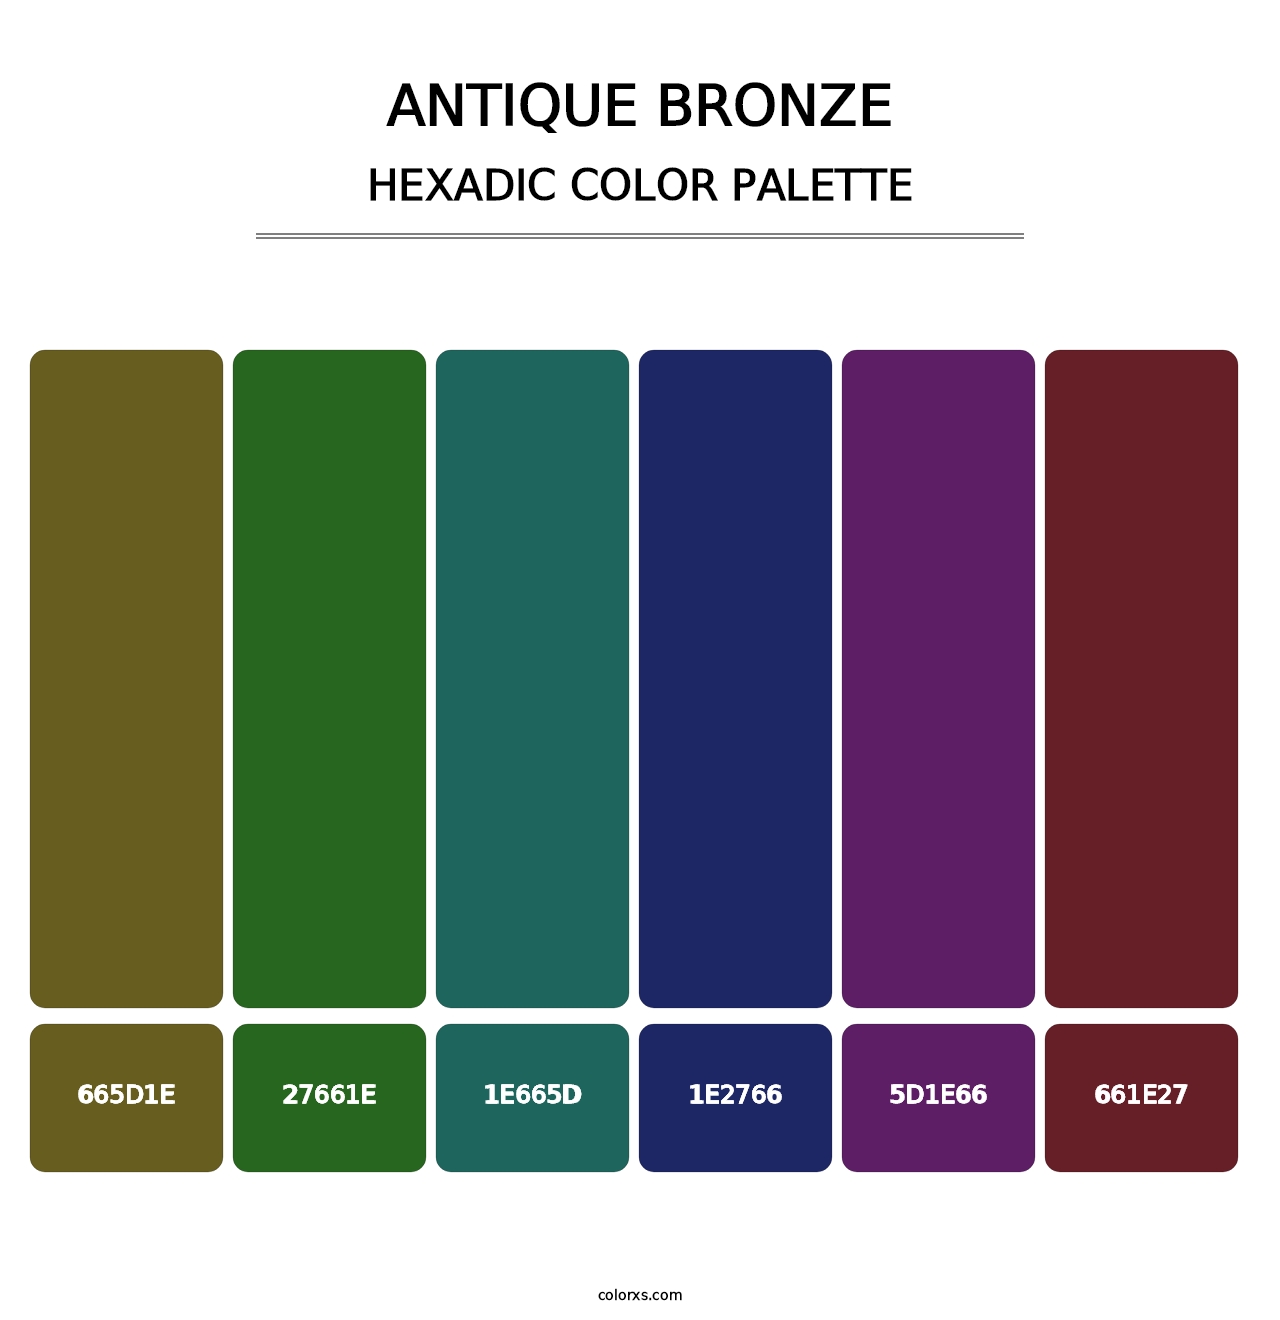 Antique Bronze - Hexadic Color Palette